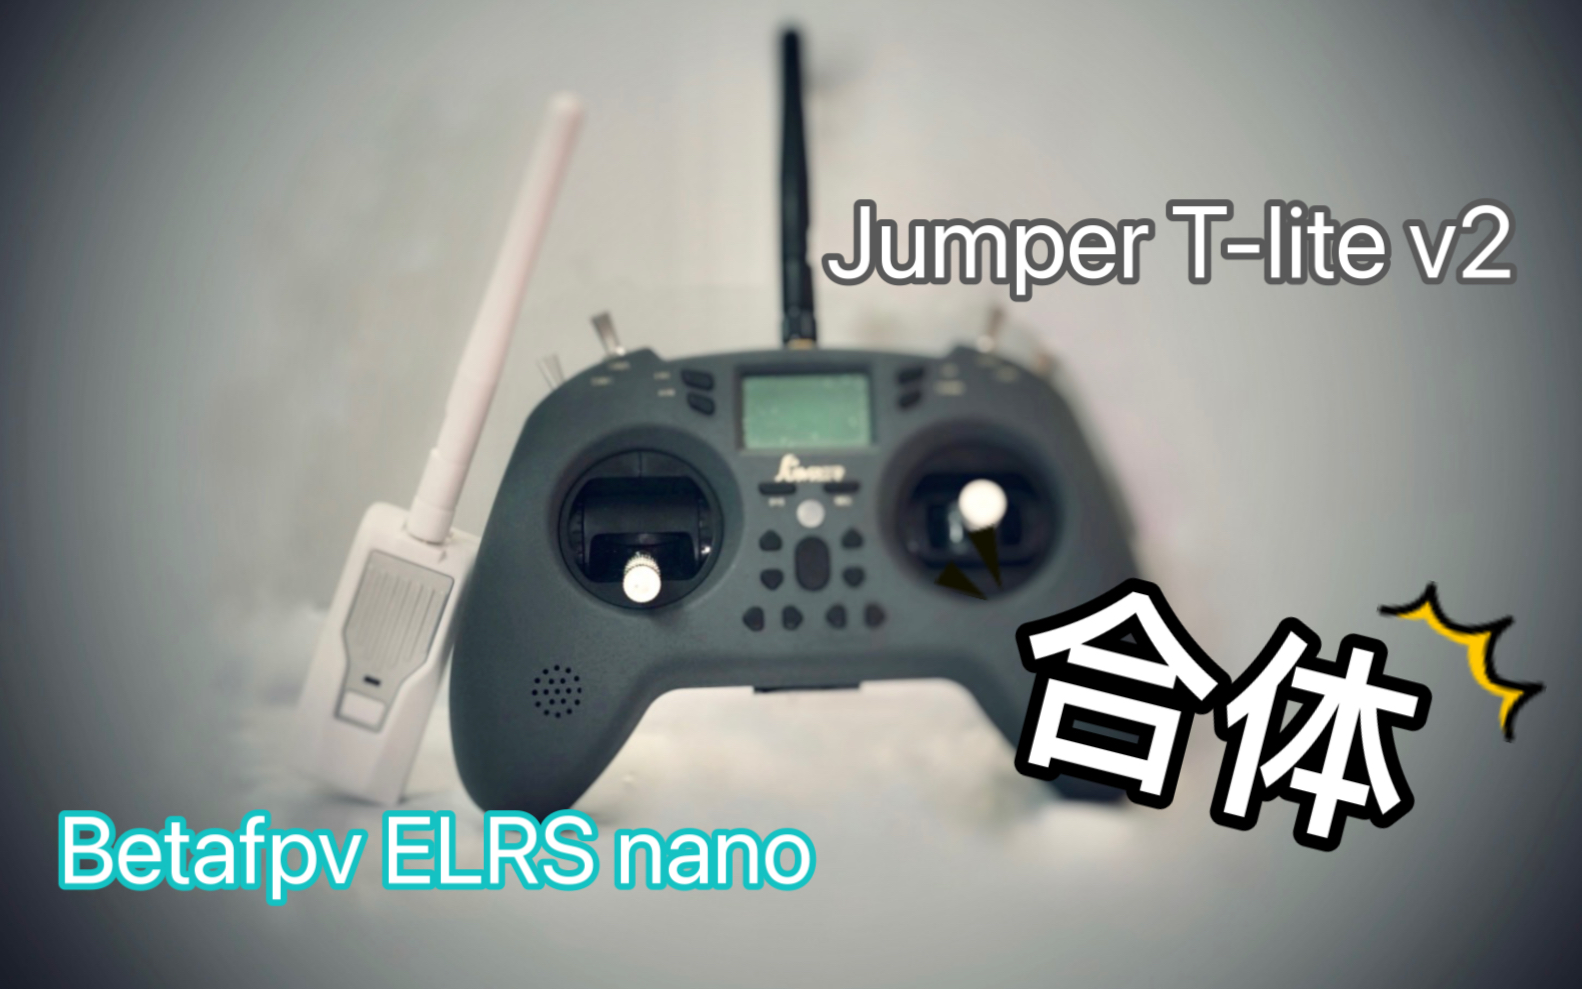 【FPV】安装 Betafpv ELRS nano 高频头 到 Jumper T-lite v2 上